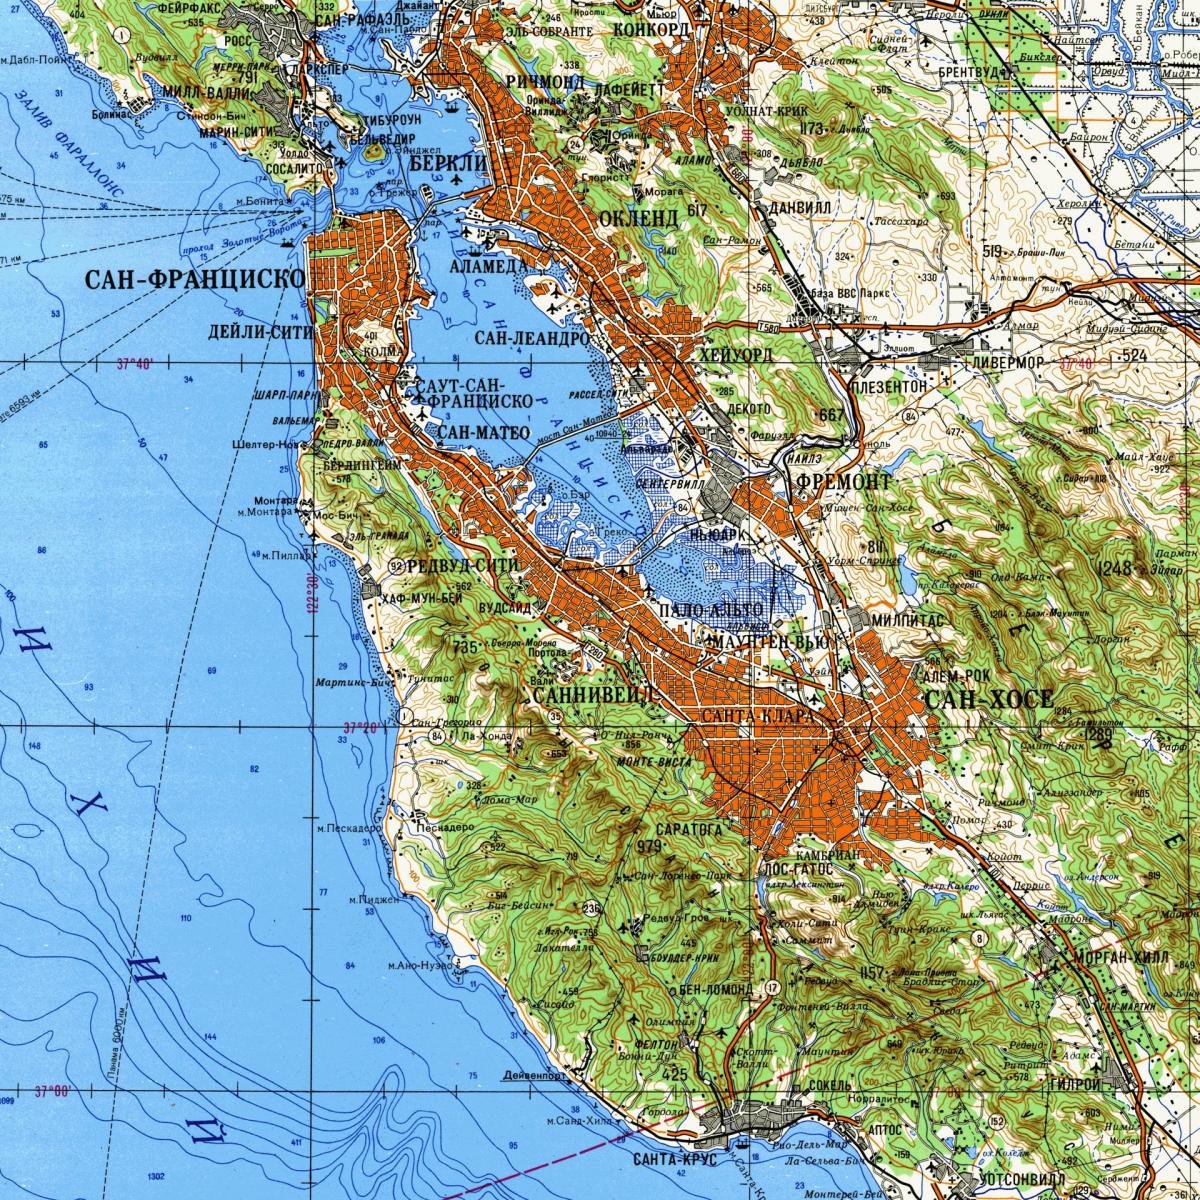 San Francisco bay area peta topografi